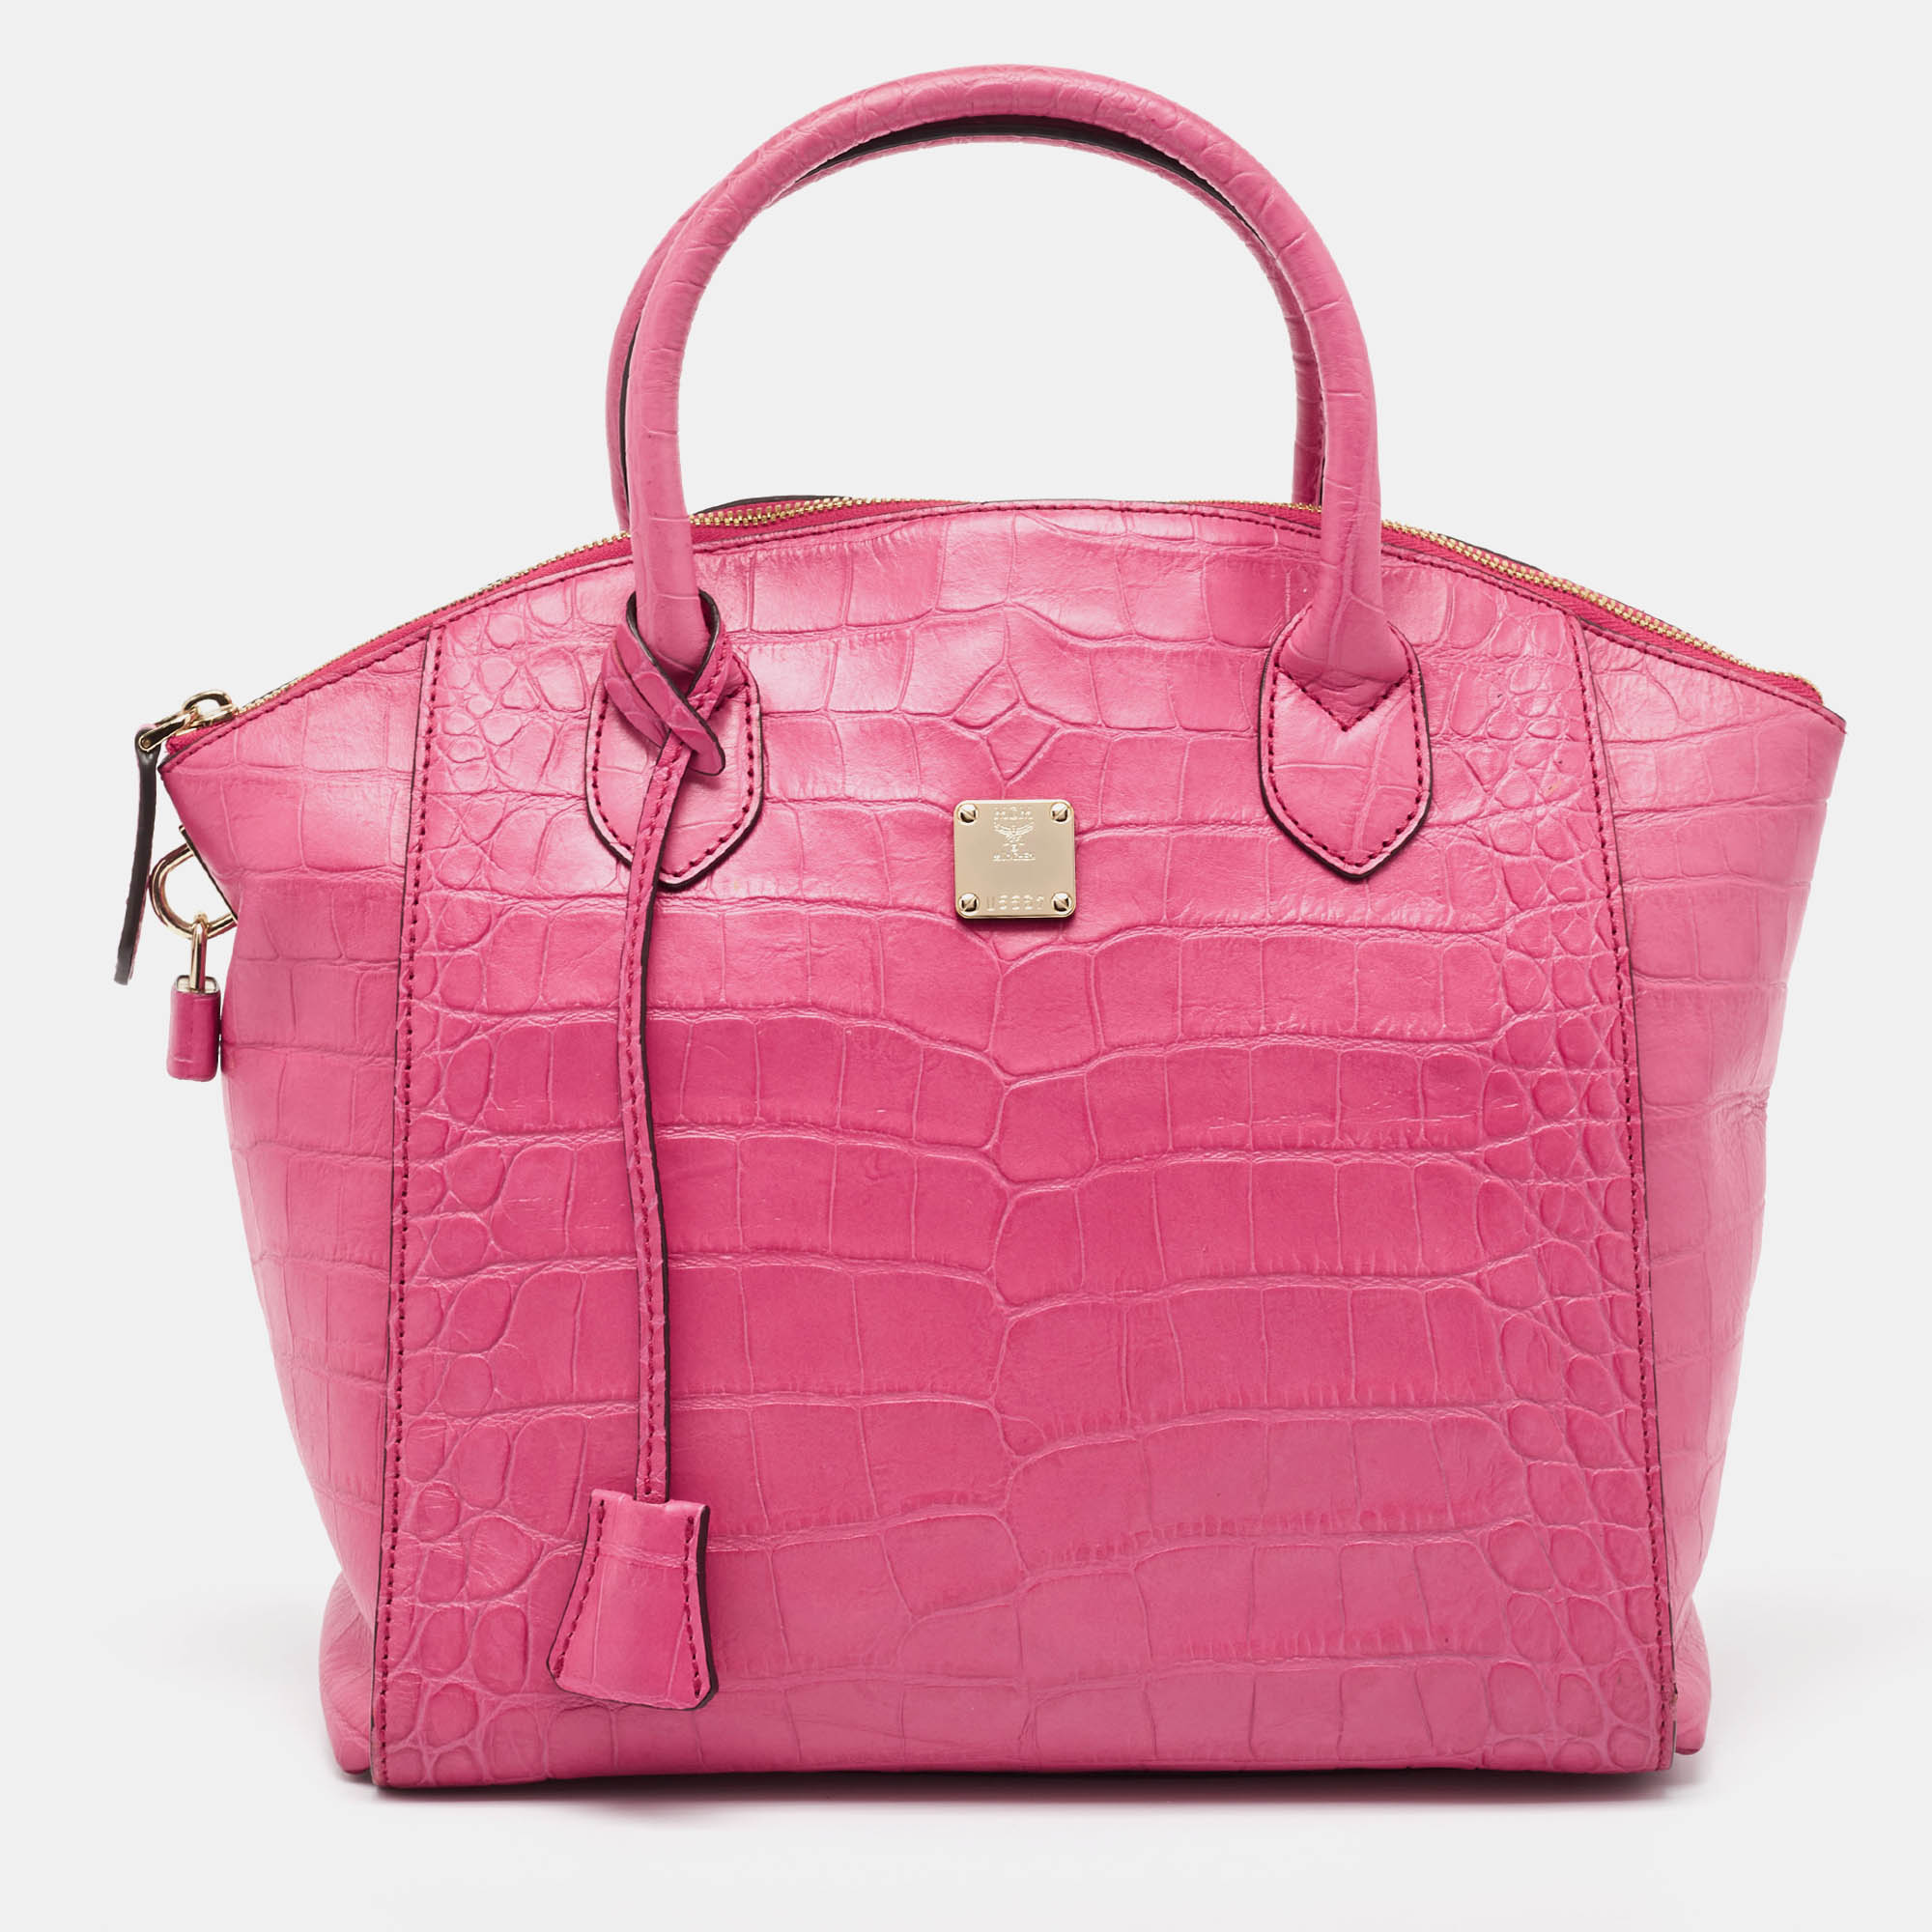 Mcm pink croc embossed leather zip satchel